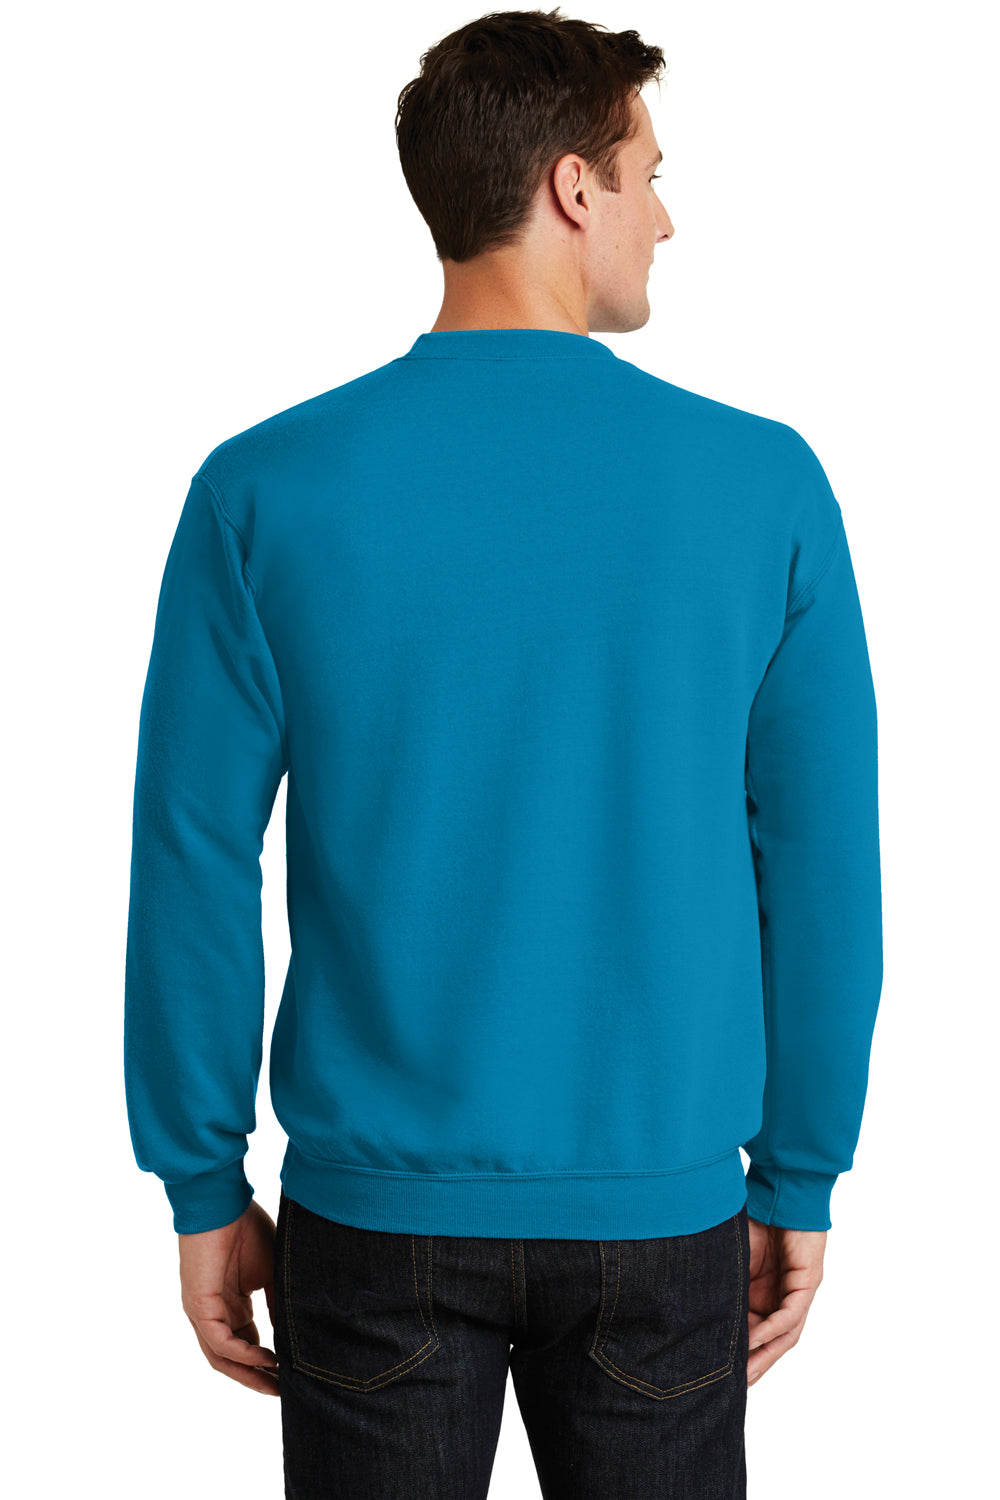 Port & Company PC78 Mens Core Fleece Crewneck Sweatshirt Neon Blue Back